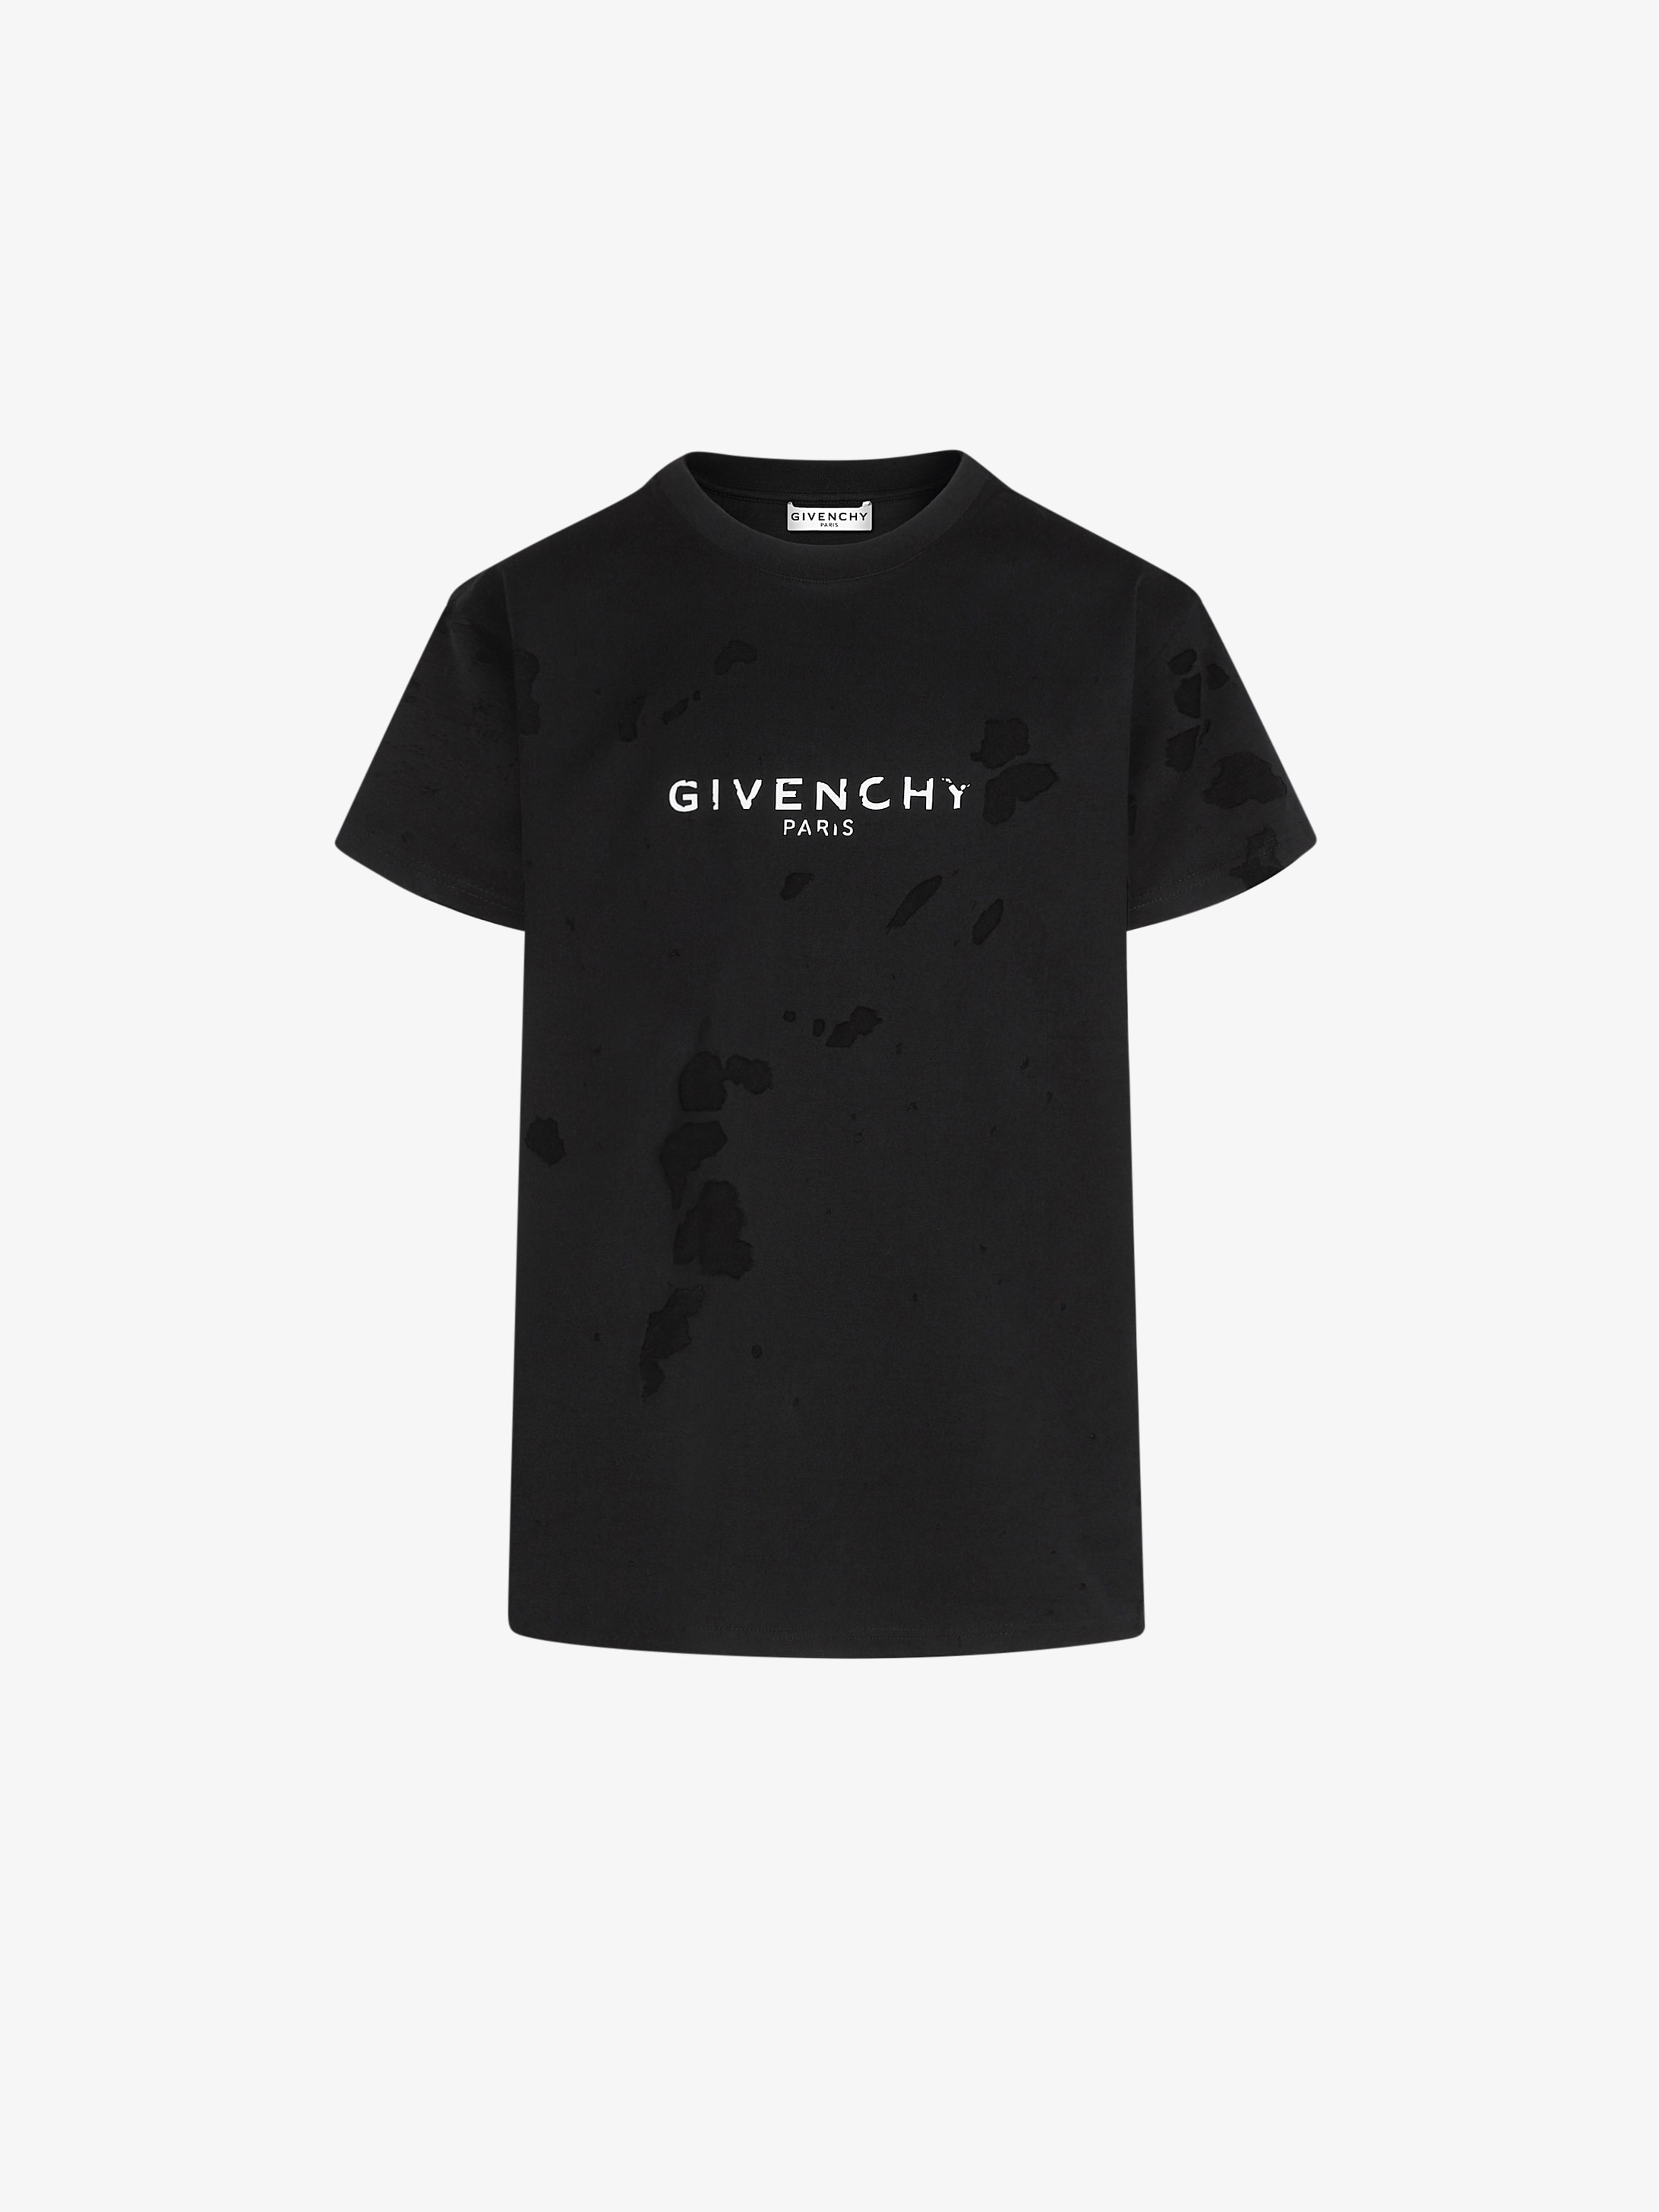 Givenchy PARIS destroyed T-shirt 